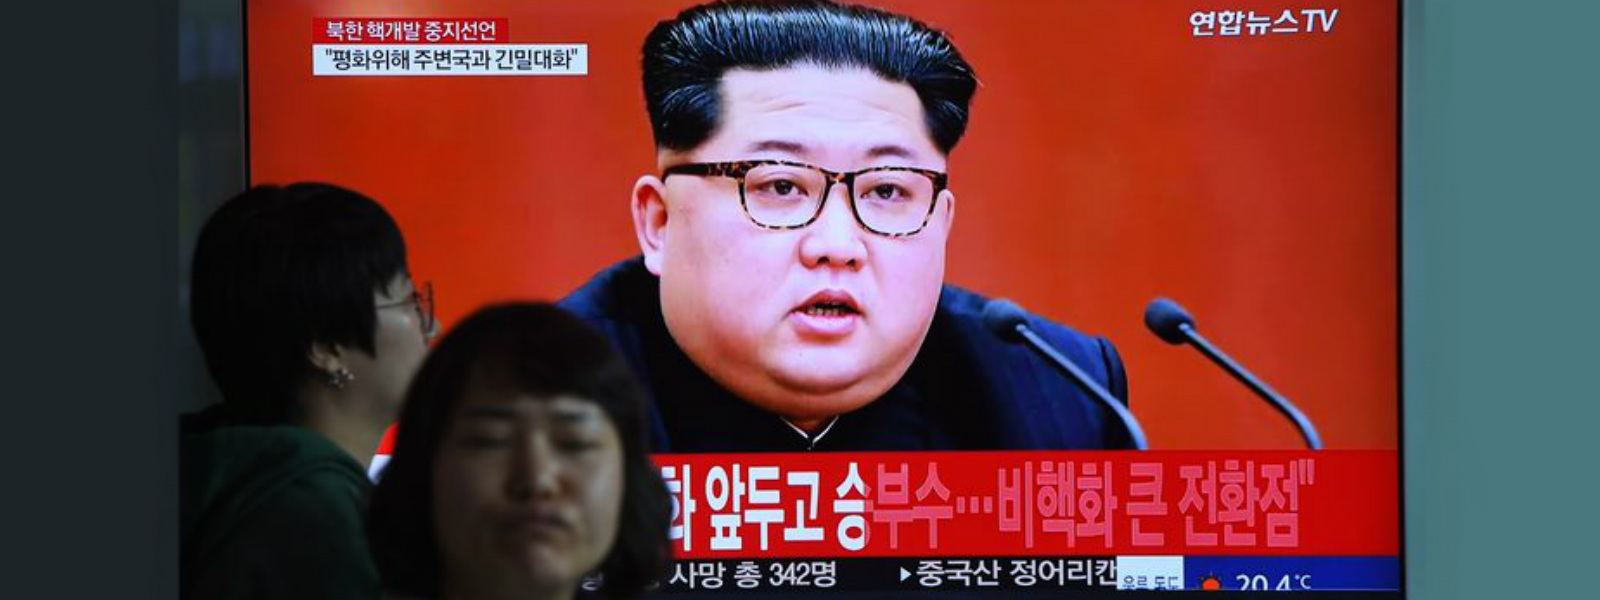 Kim Jong-un: No signs of heart surgery, says SK